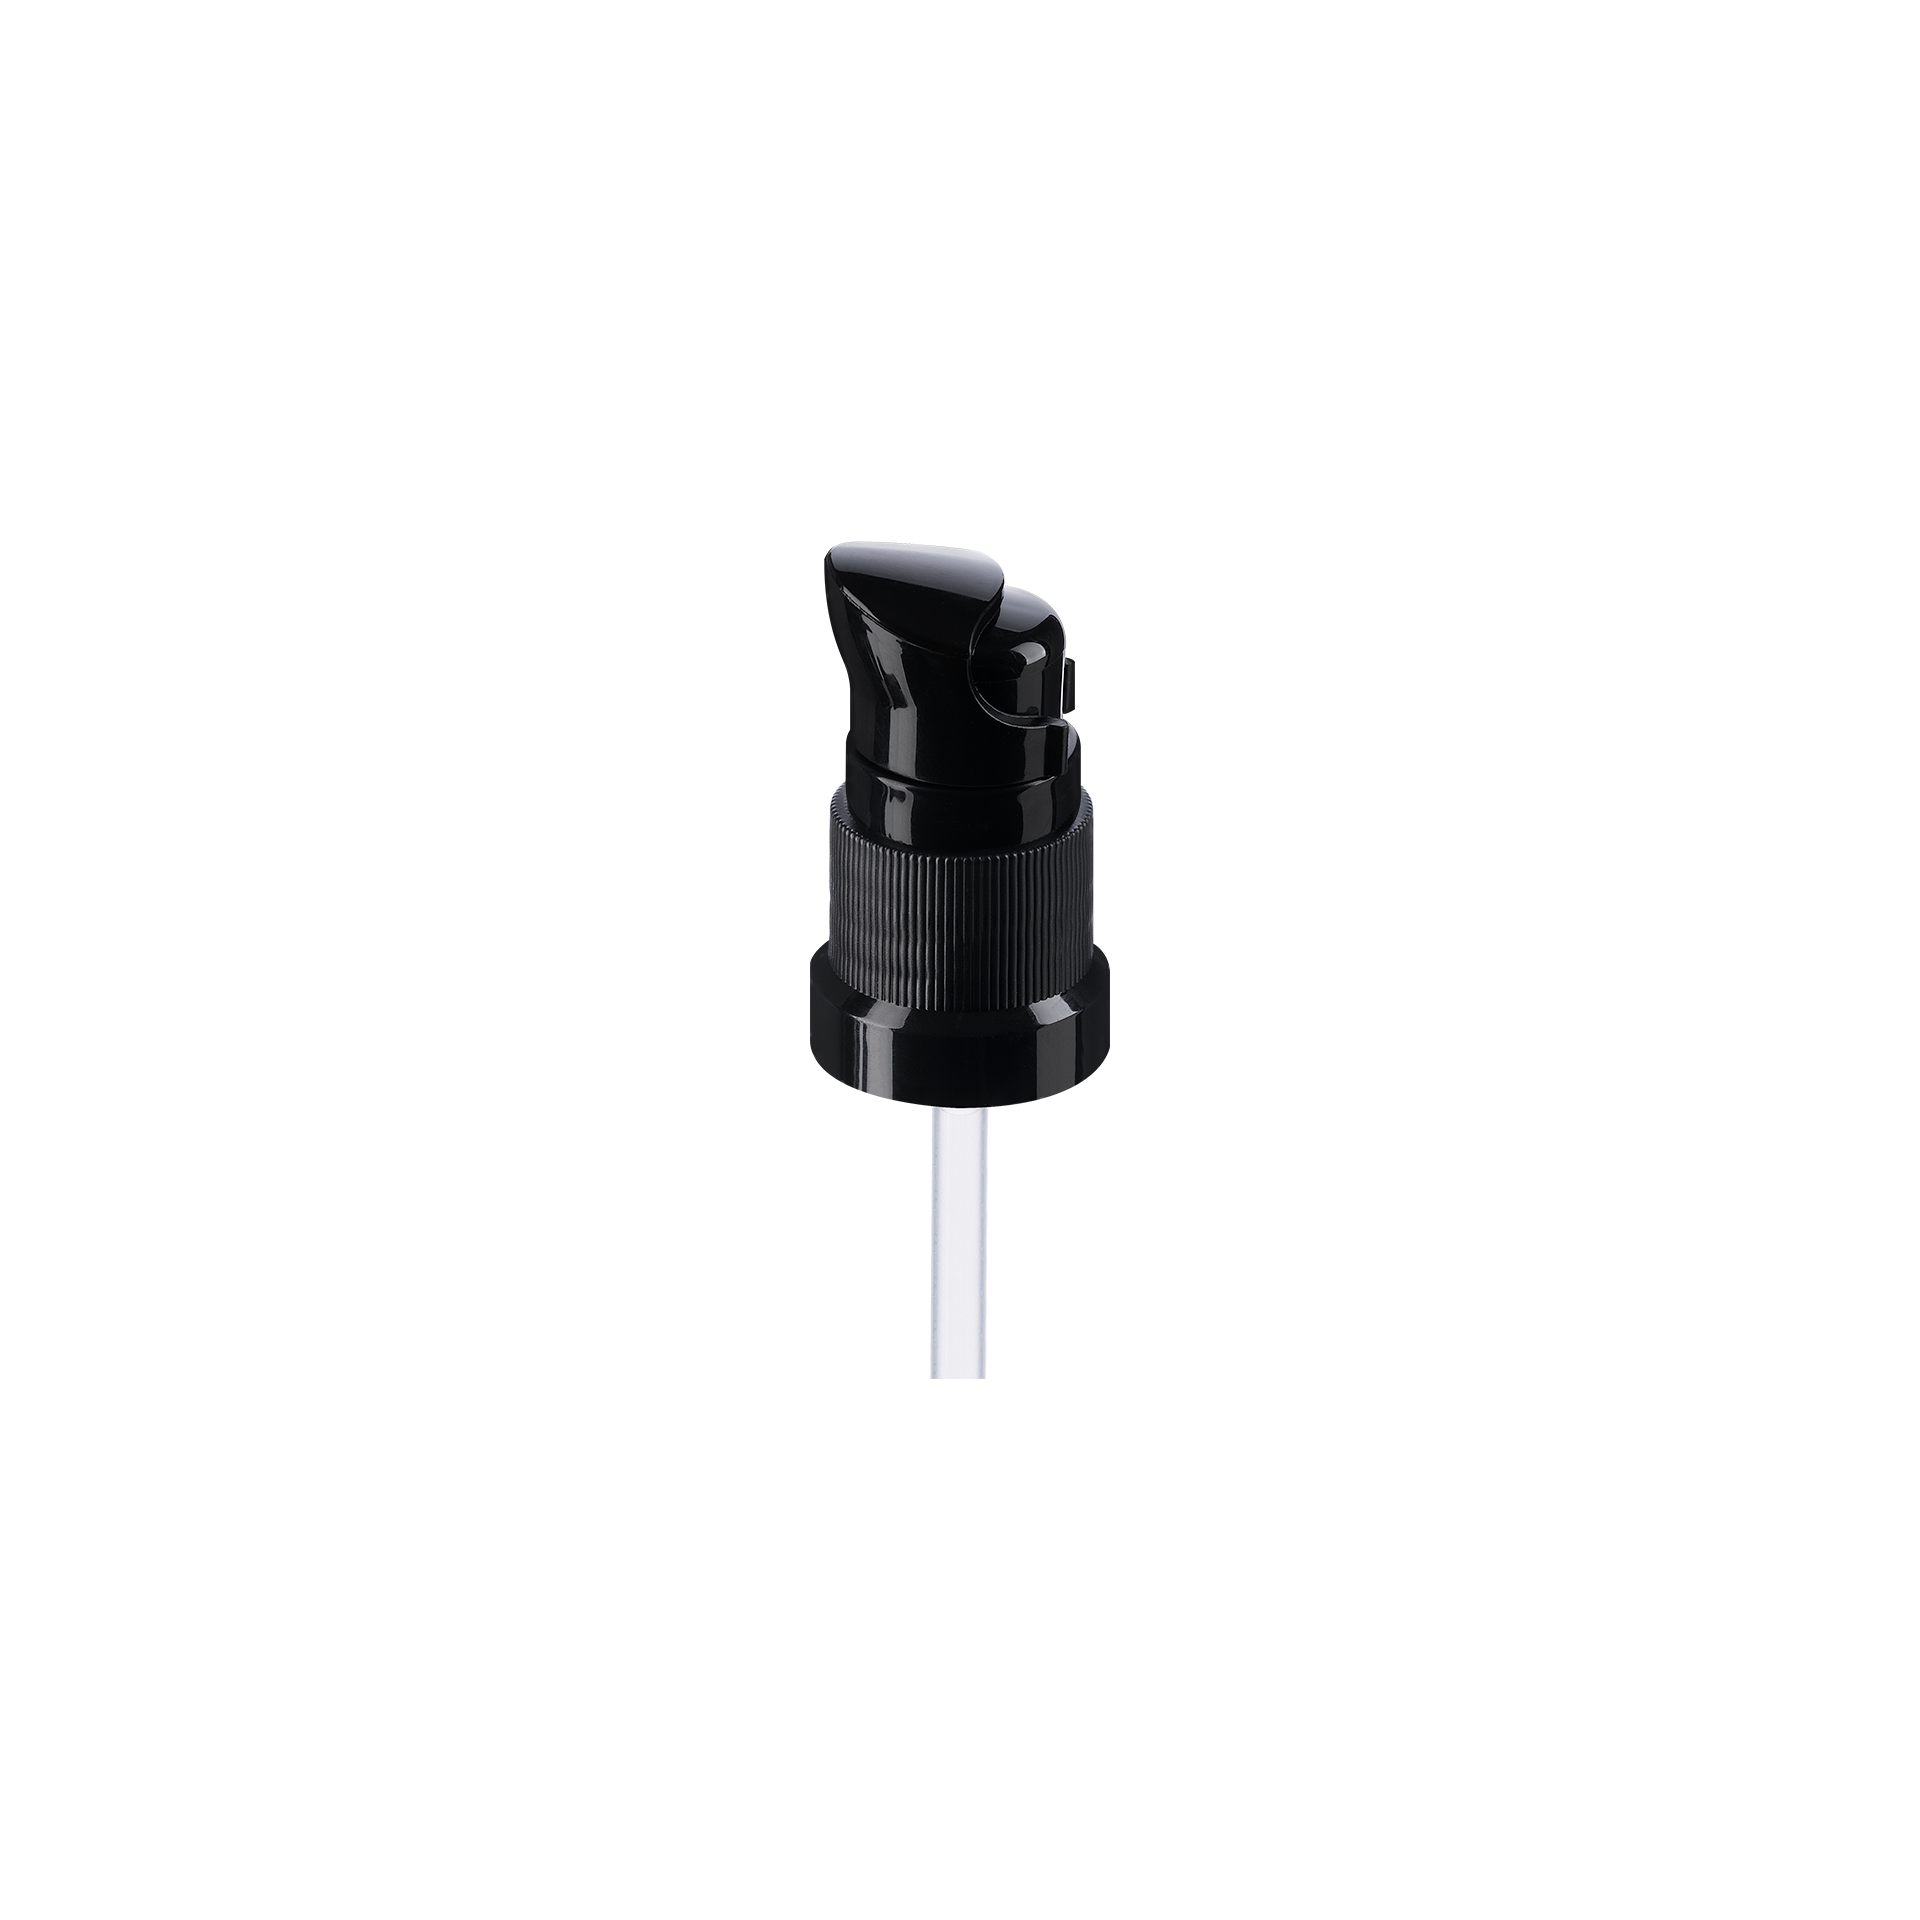 Lotion pump Metropolitan DIN18, PP, black, dose 0.10ml, black security clip (Ginger 5)